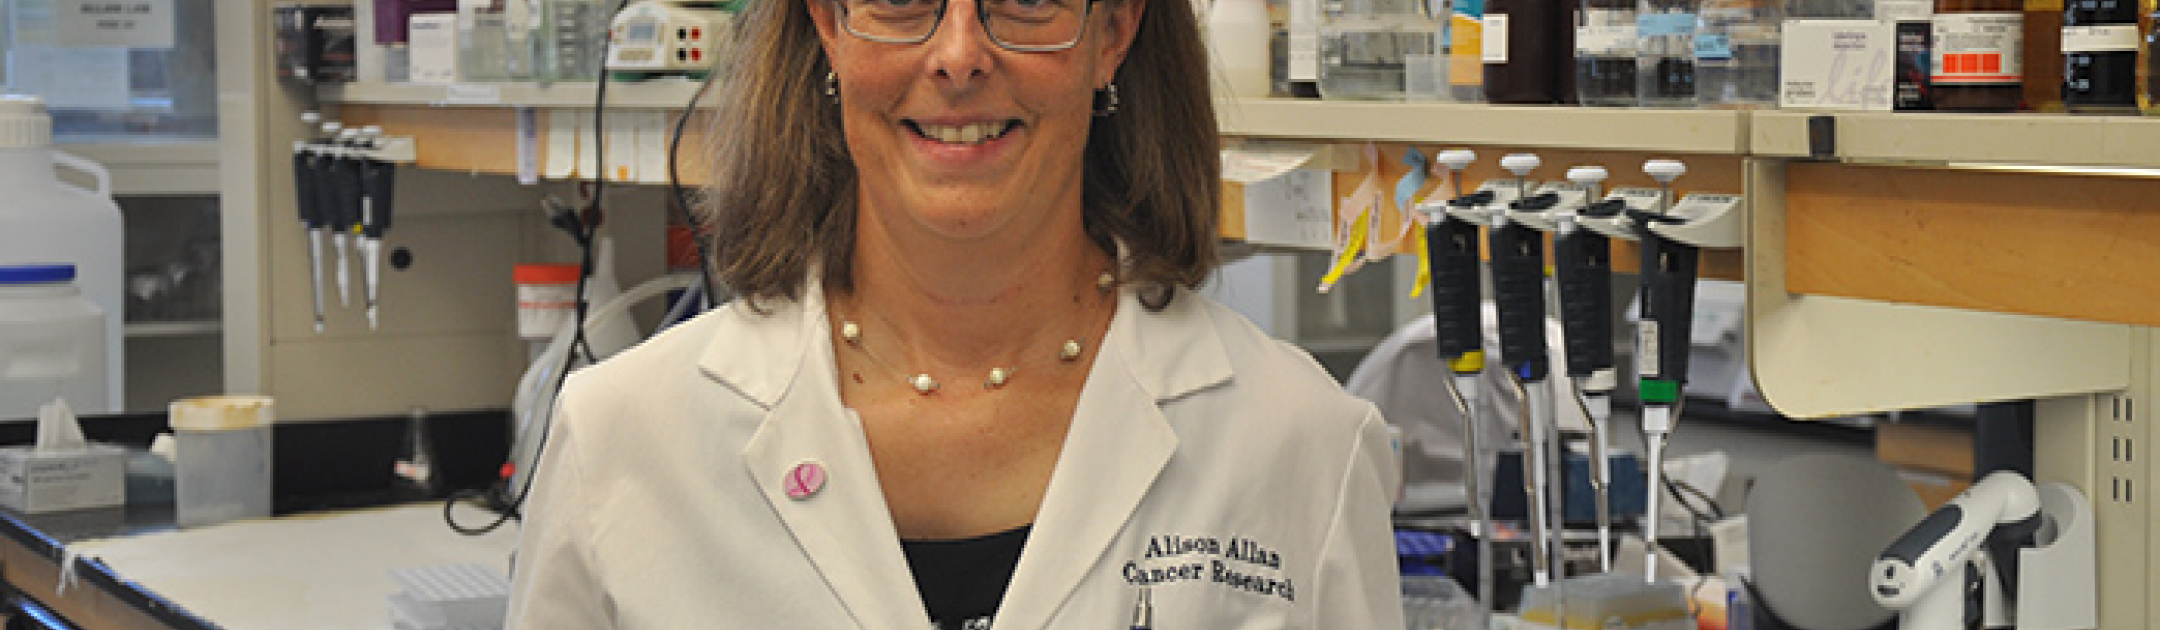 Dr. Alison Allan